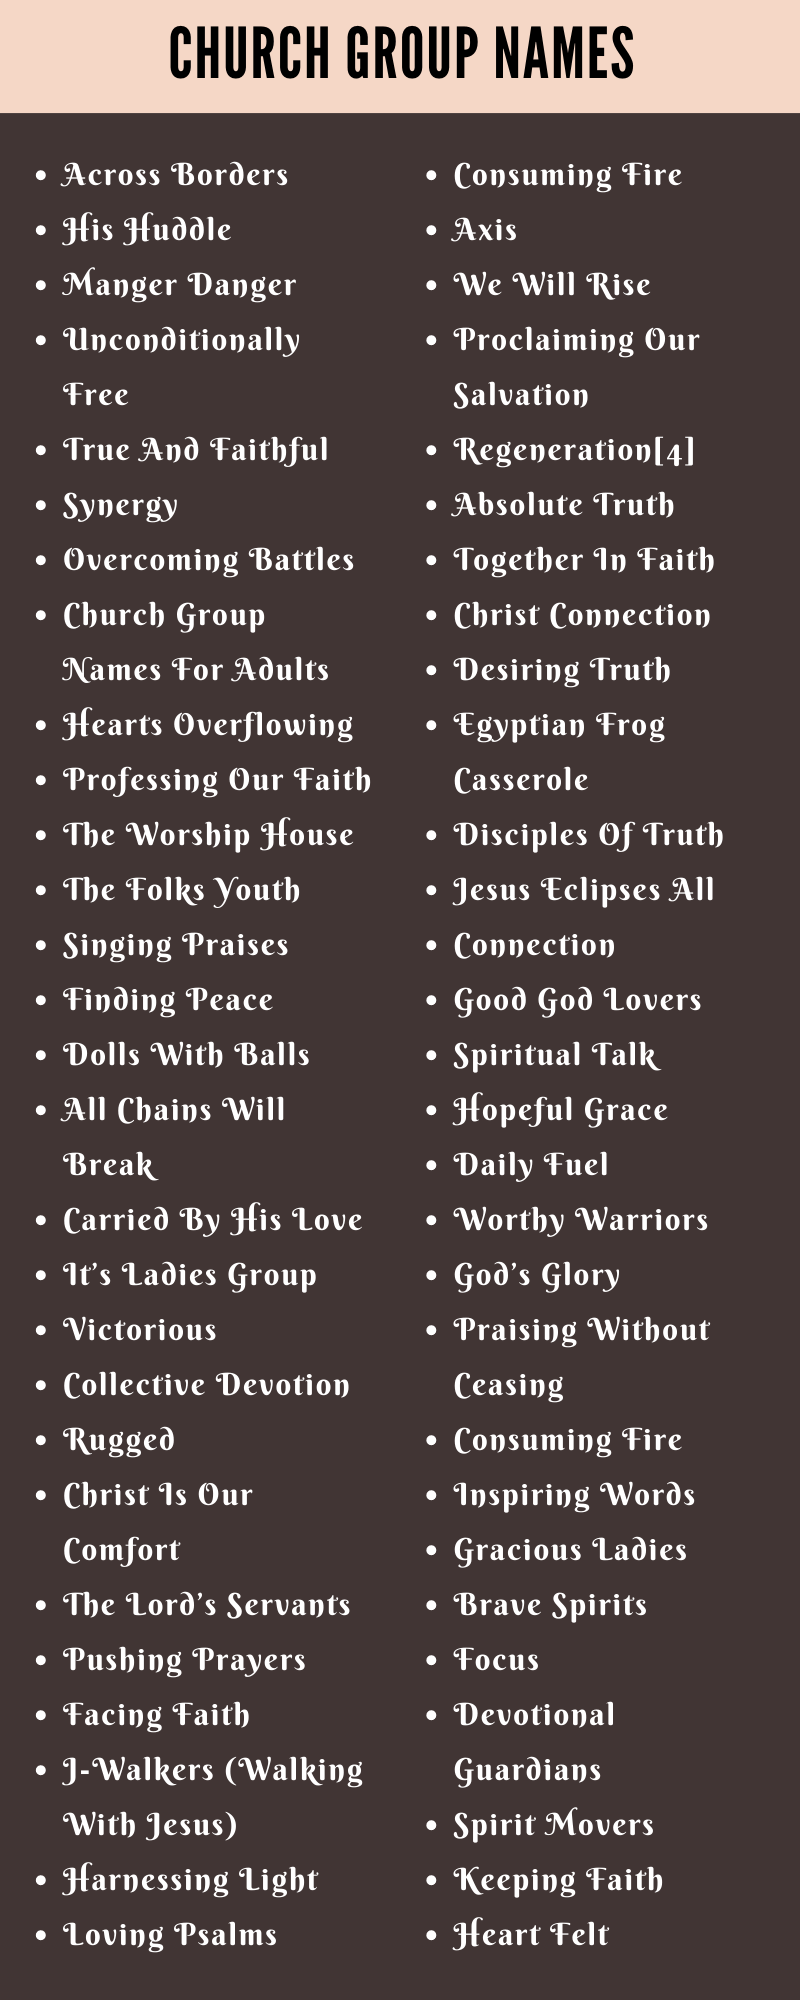 Church Group Names